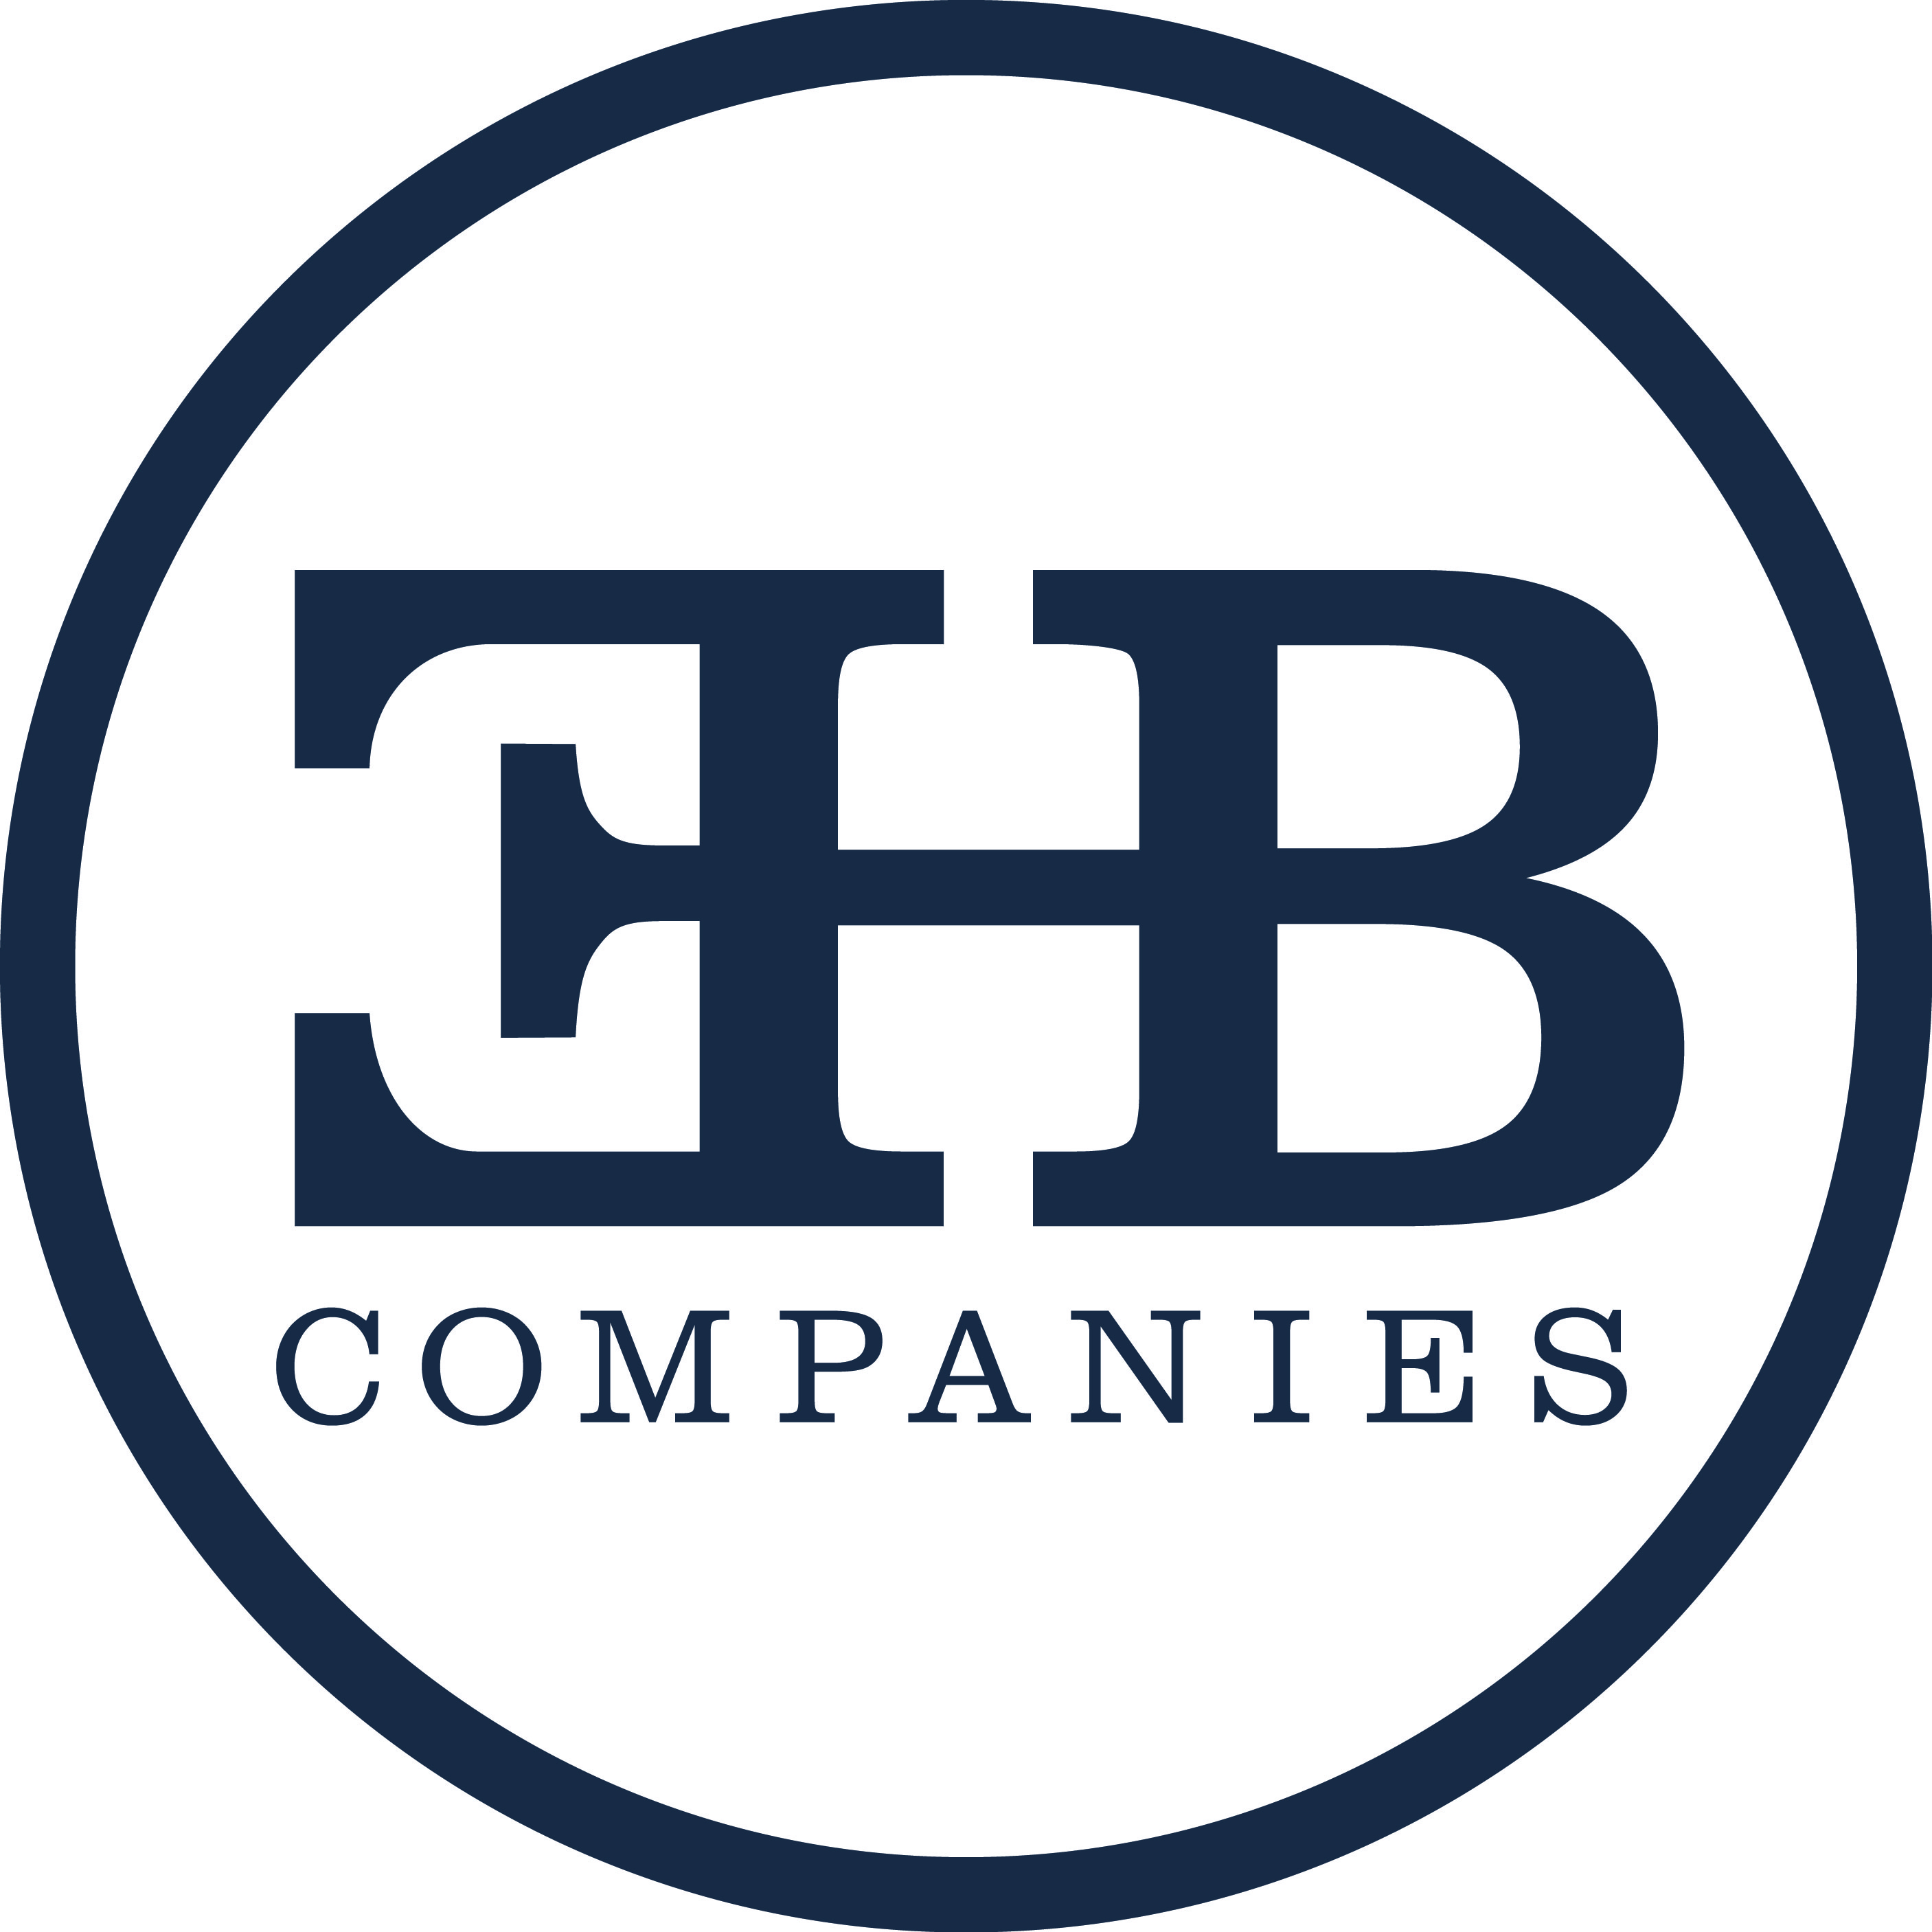 EHB Companies Logo